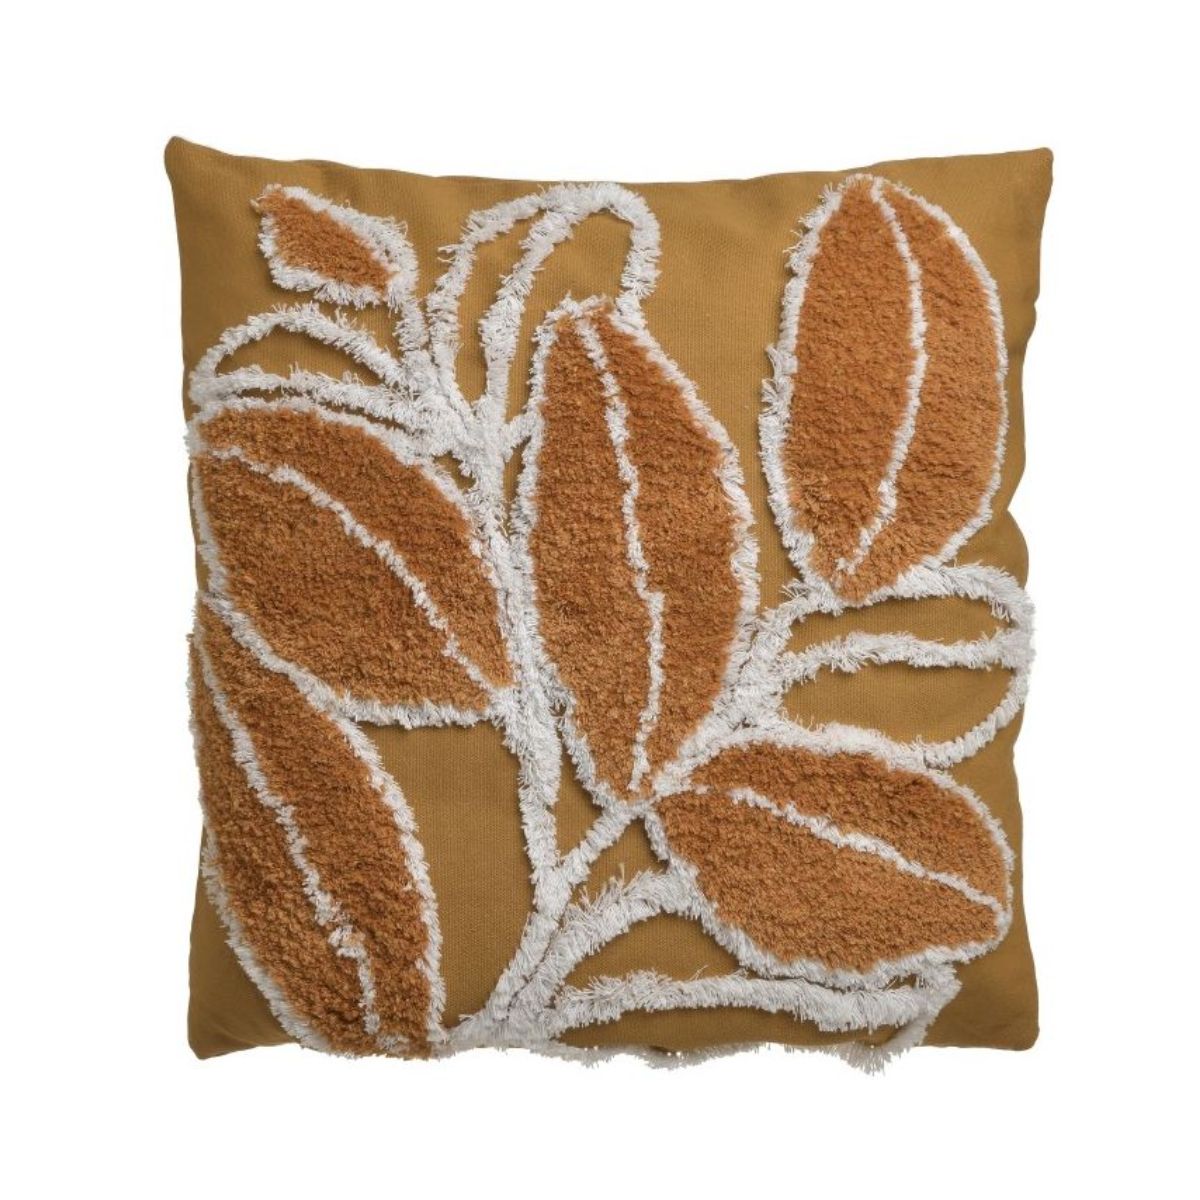 DECORATIUNI INTERIOR - Perna decorativa bej/portocaliu/alb din poliester 45X45 cm Leaves Inart, hectarul.ro